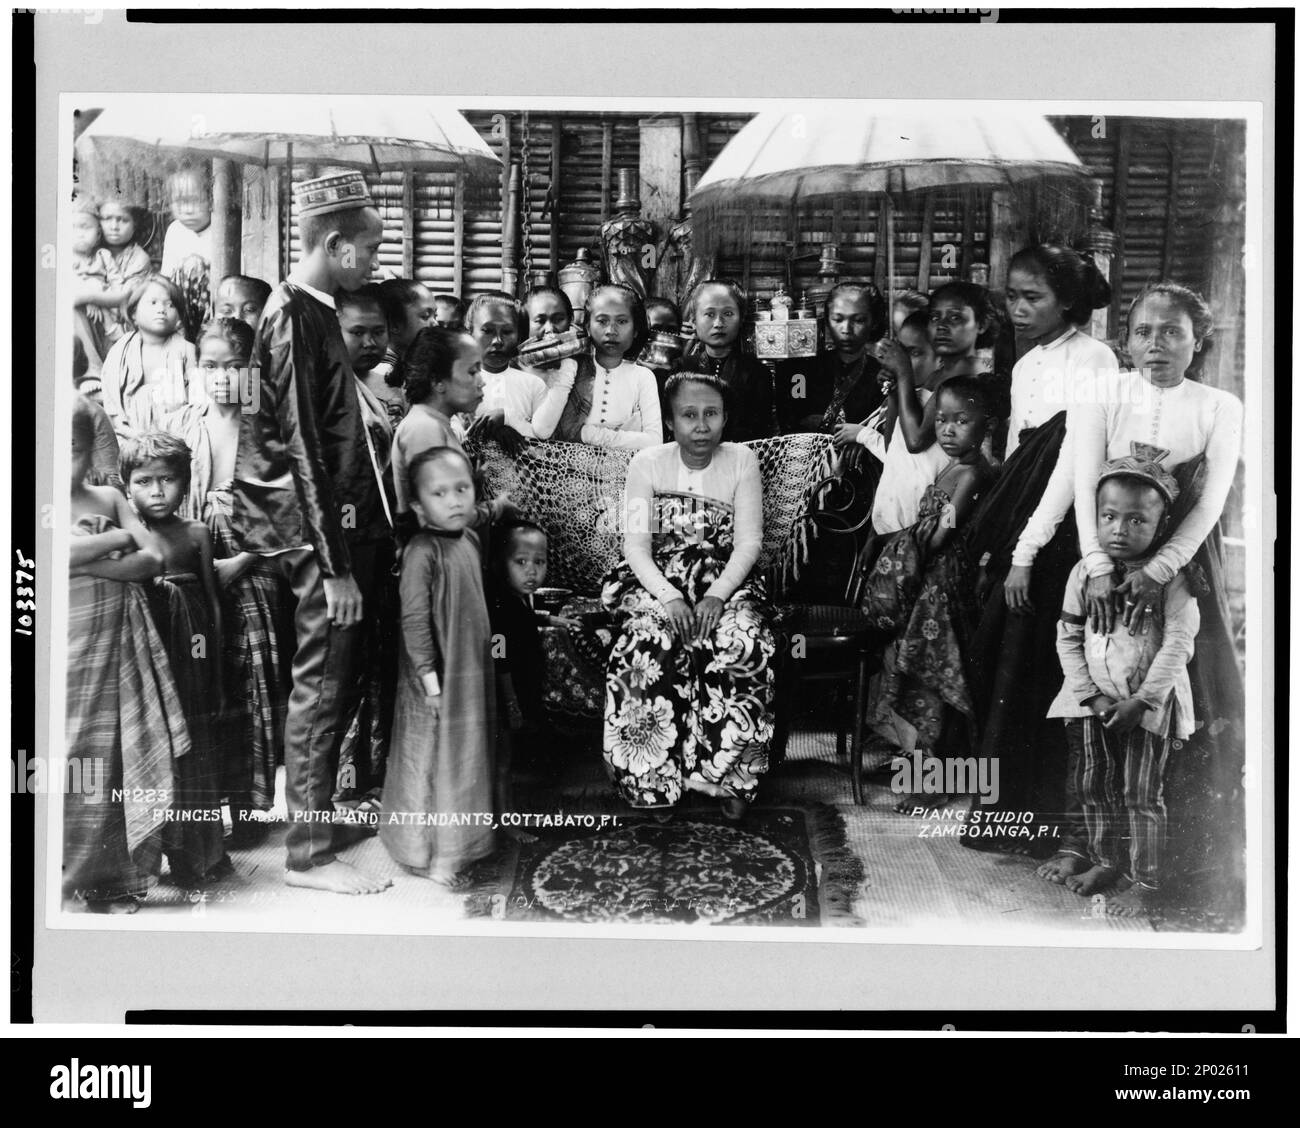 Princes sic Radcai.e. Radja? Putrie and attendants, Cottabatoi.e. Cotabato, P.I. / Piang Studio, Zamboanga, P.I. , Princes Radca Putrie and attendants, Cottabato, P.I.Princess Radja Putrie and attendants, Cotabato, P.I.. No. 223, Frank and Frances Carpenter Collection, Princesses,Philippines,Cotabato,1900-1930, Servants,Philippines,Cotabato,1900-1930. Stock Photo